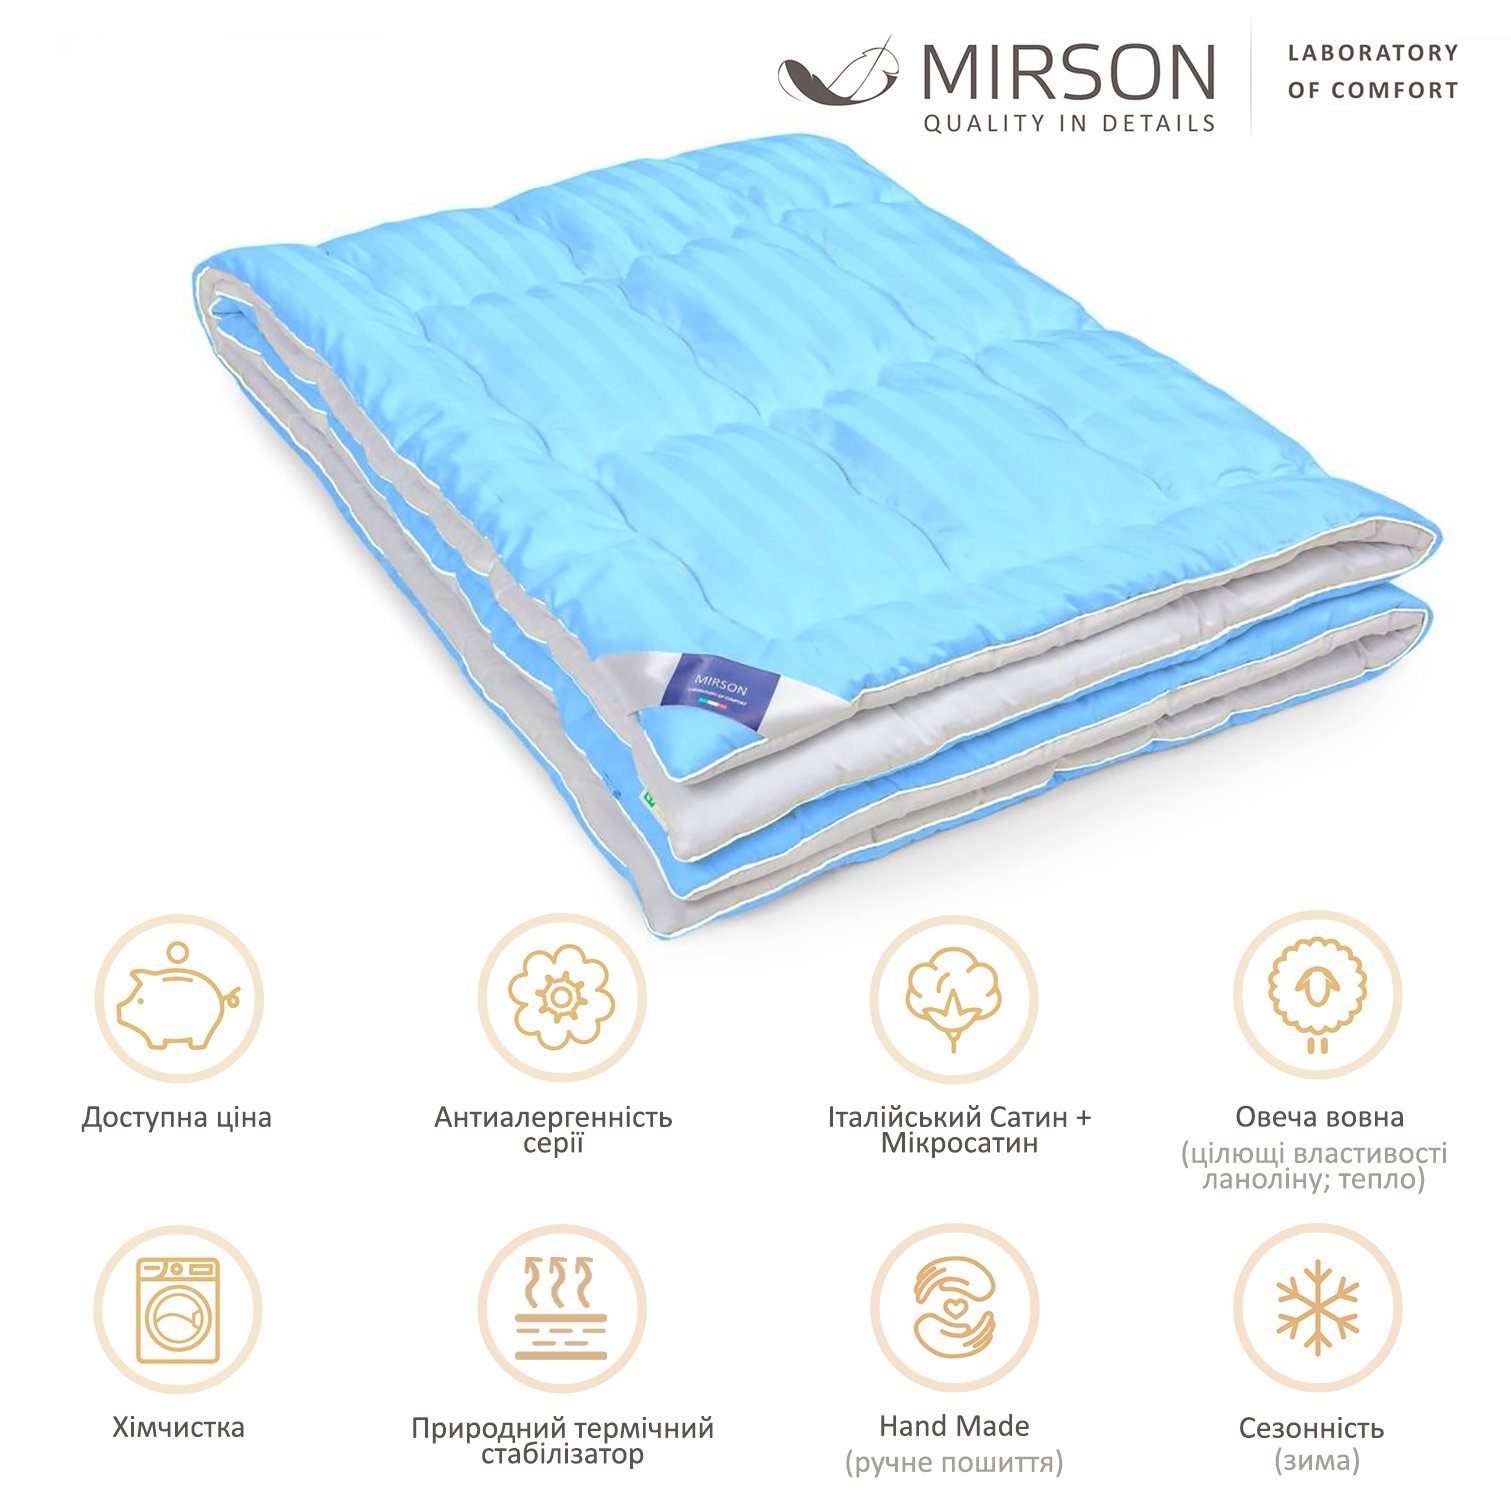 Одеяло шерстяное MirSon Valentino Hand Made №1356, зимнее, 155x215 см, бело-голубое - фото 5